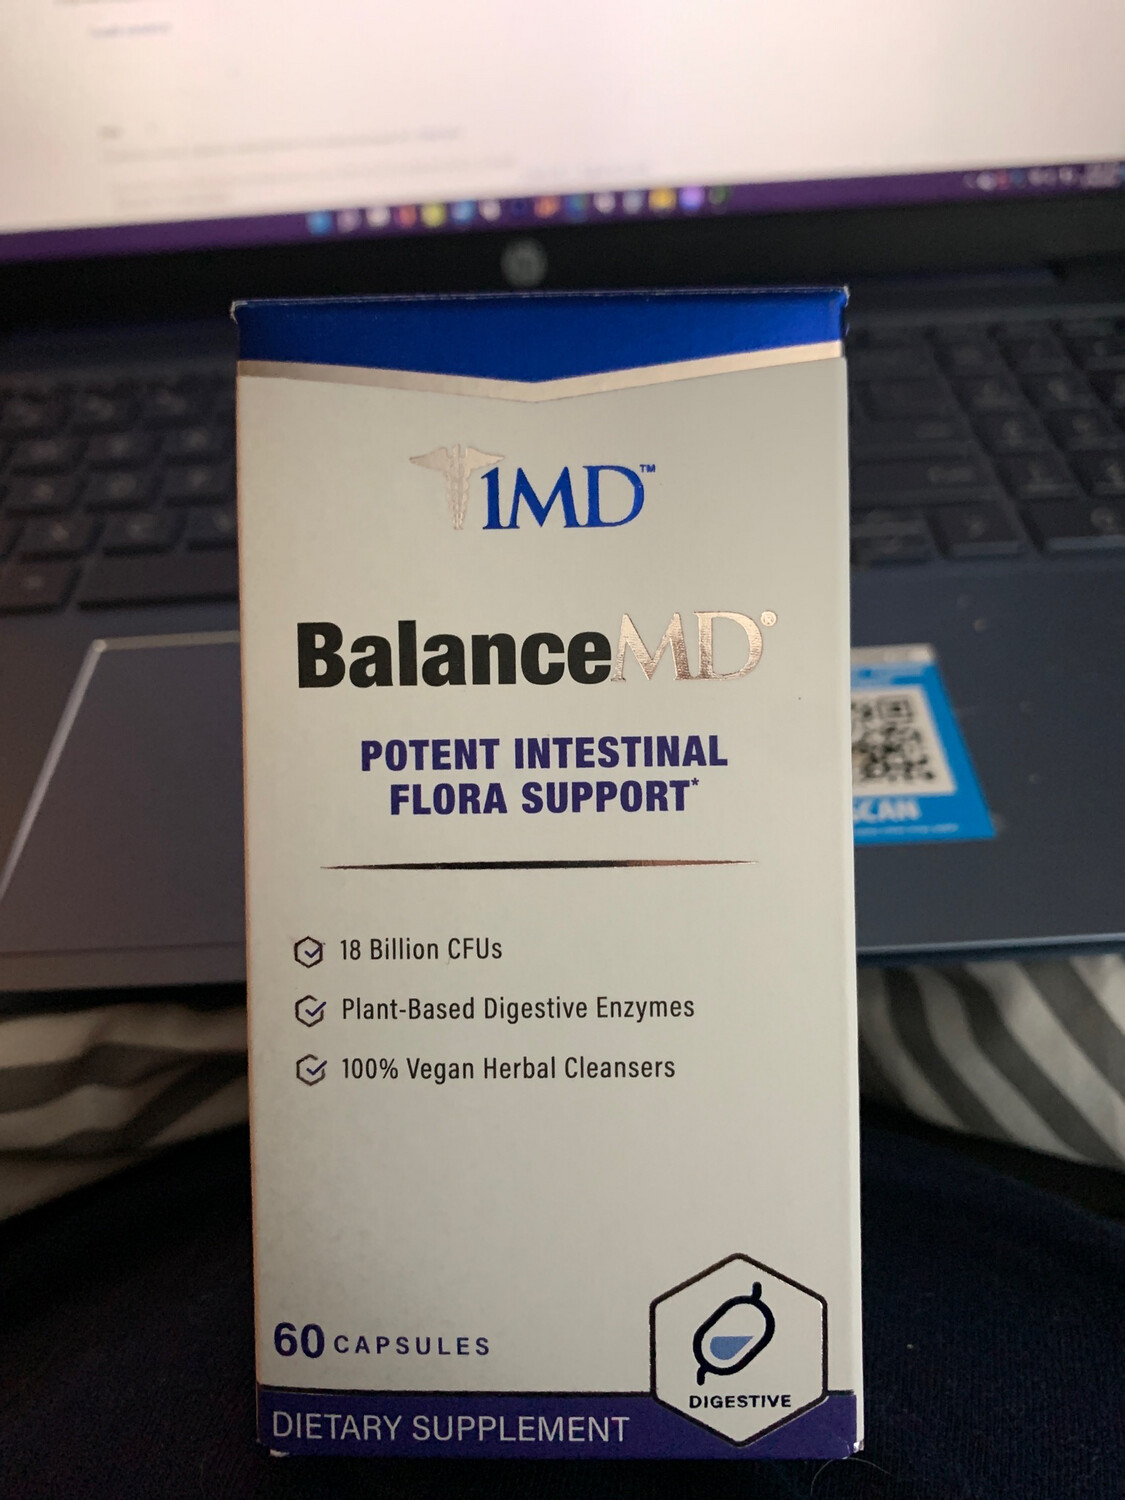 1 MD Balance MD Potent Intestinal Flora Support